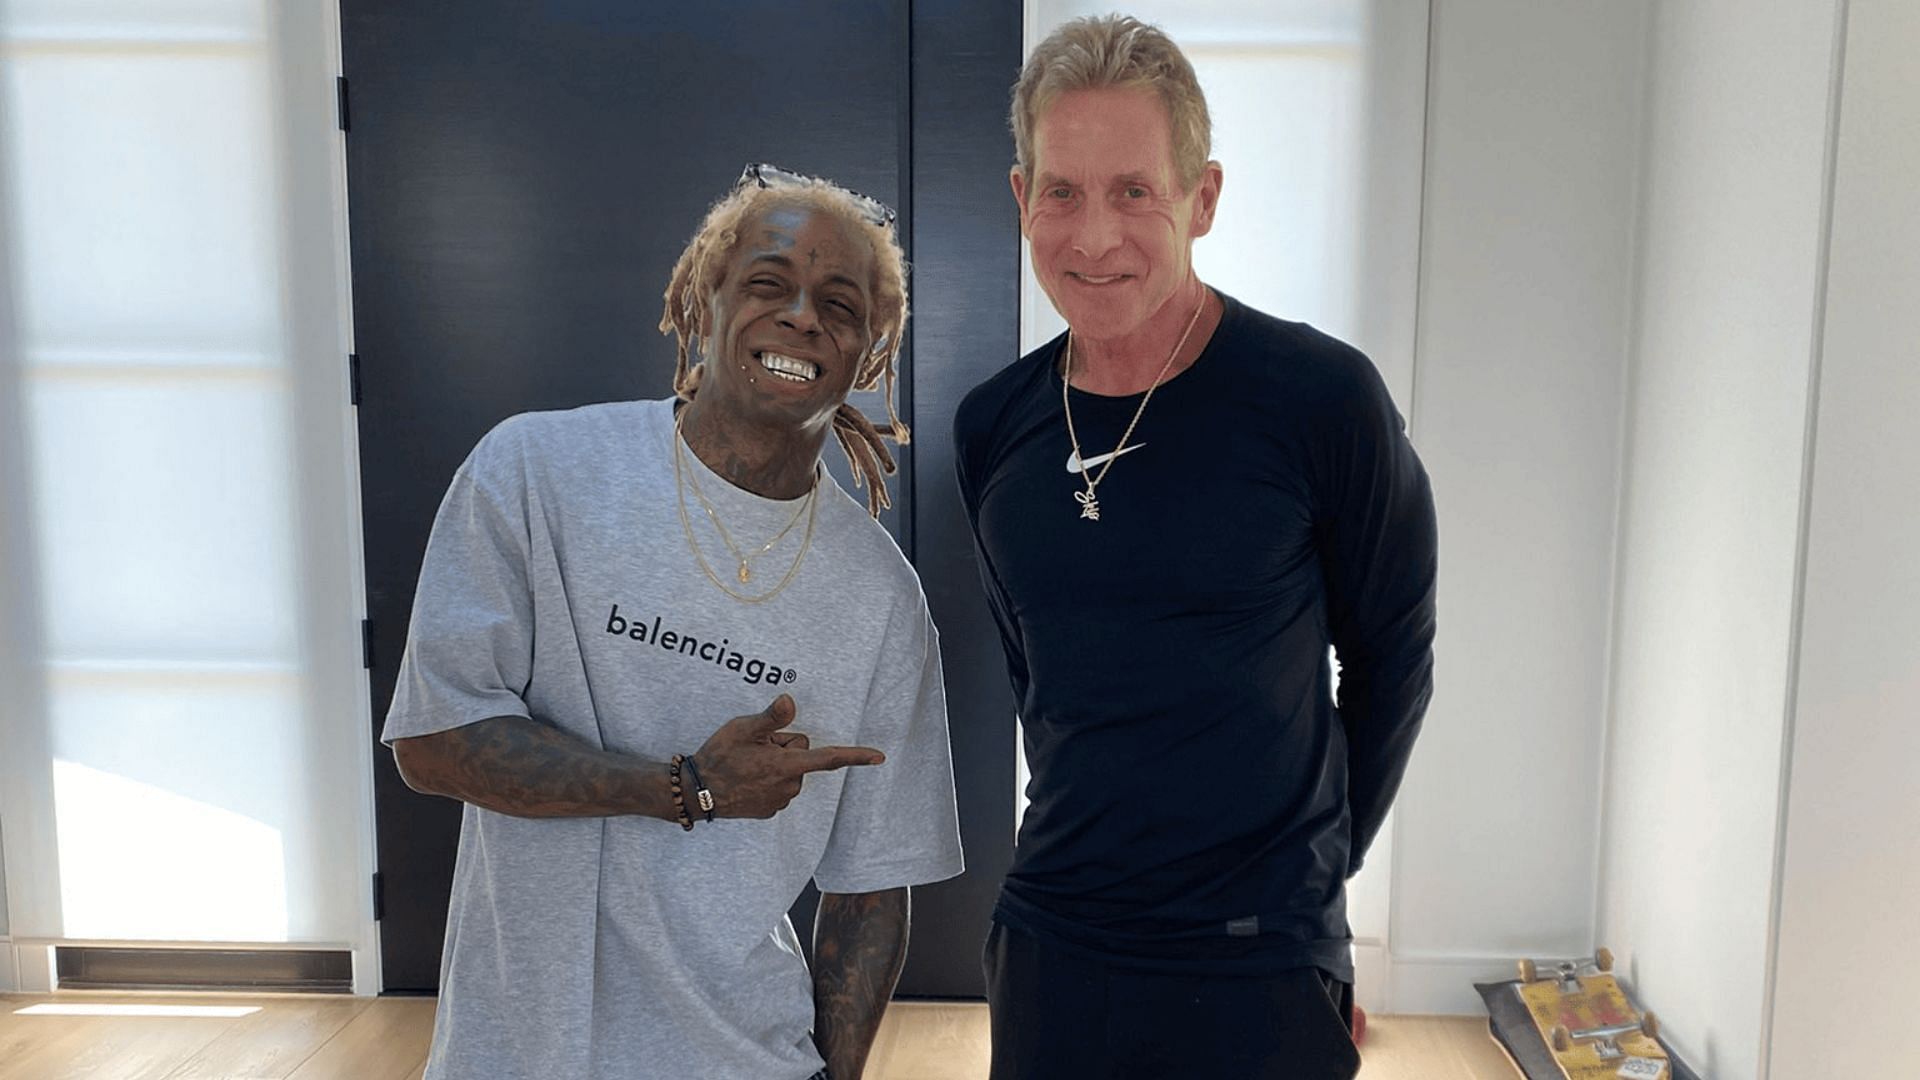 Skip Bayless visited his friend, Lil Wayne, at the hip-hop artist